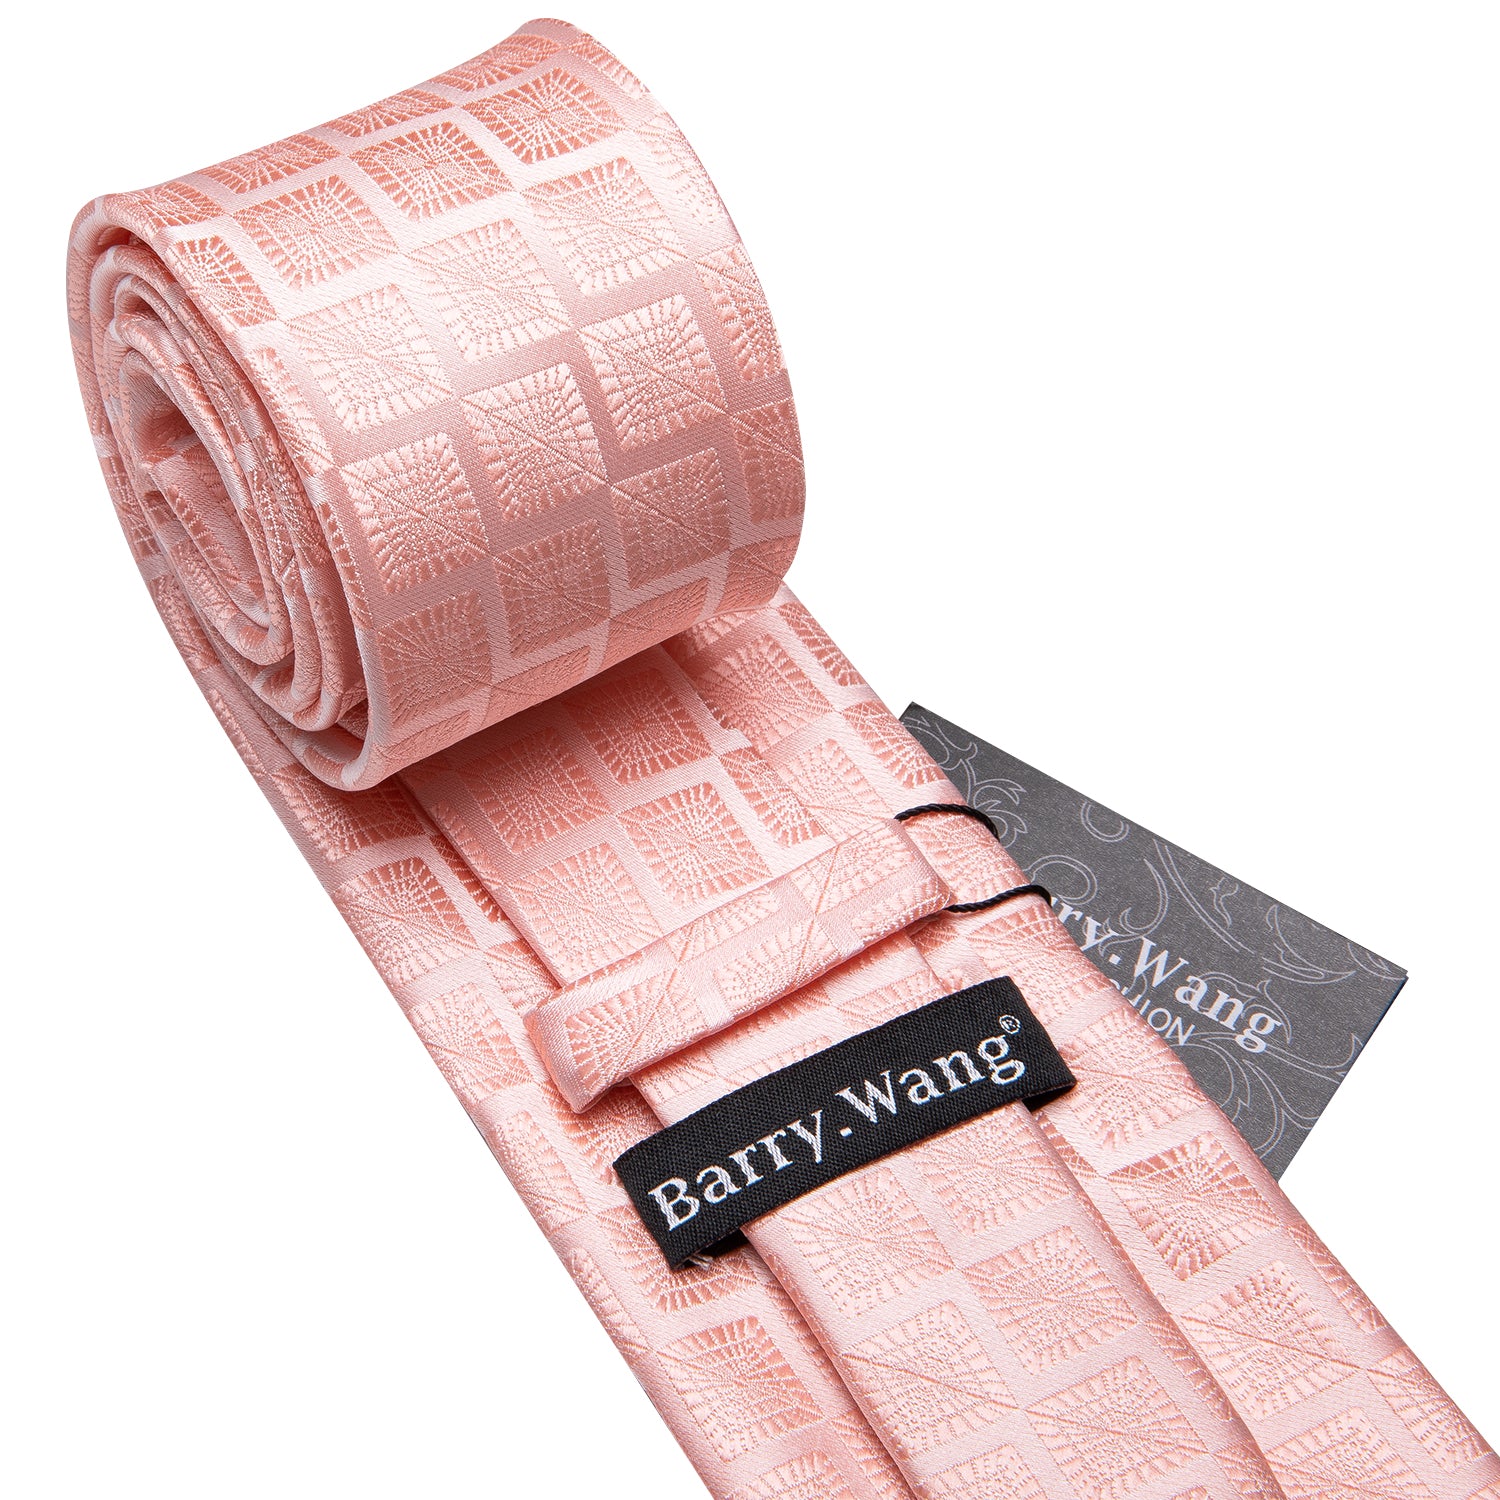 Solid Pink Plaid Tie Hanky Cufflinks Set